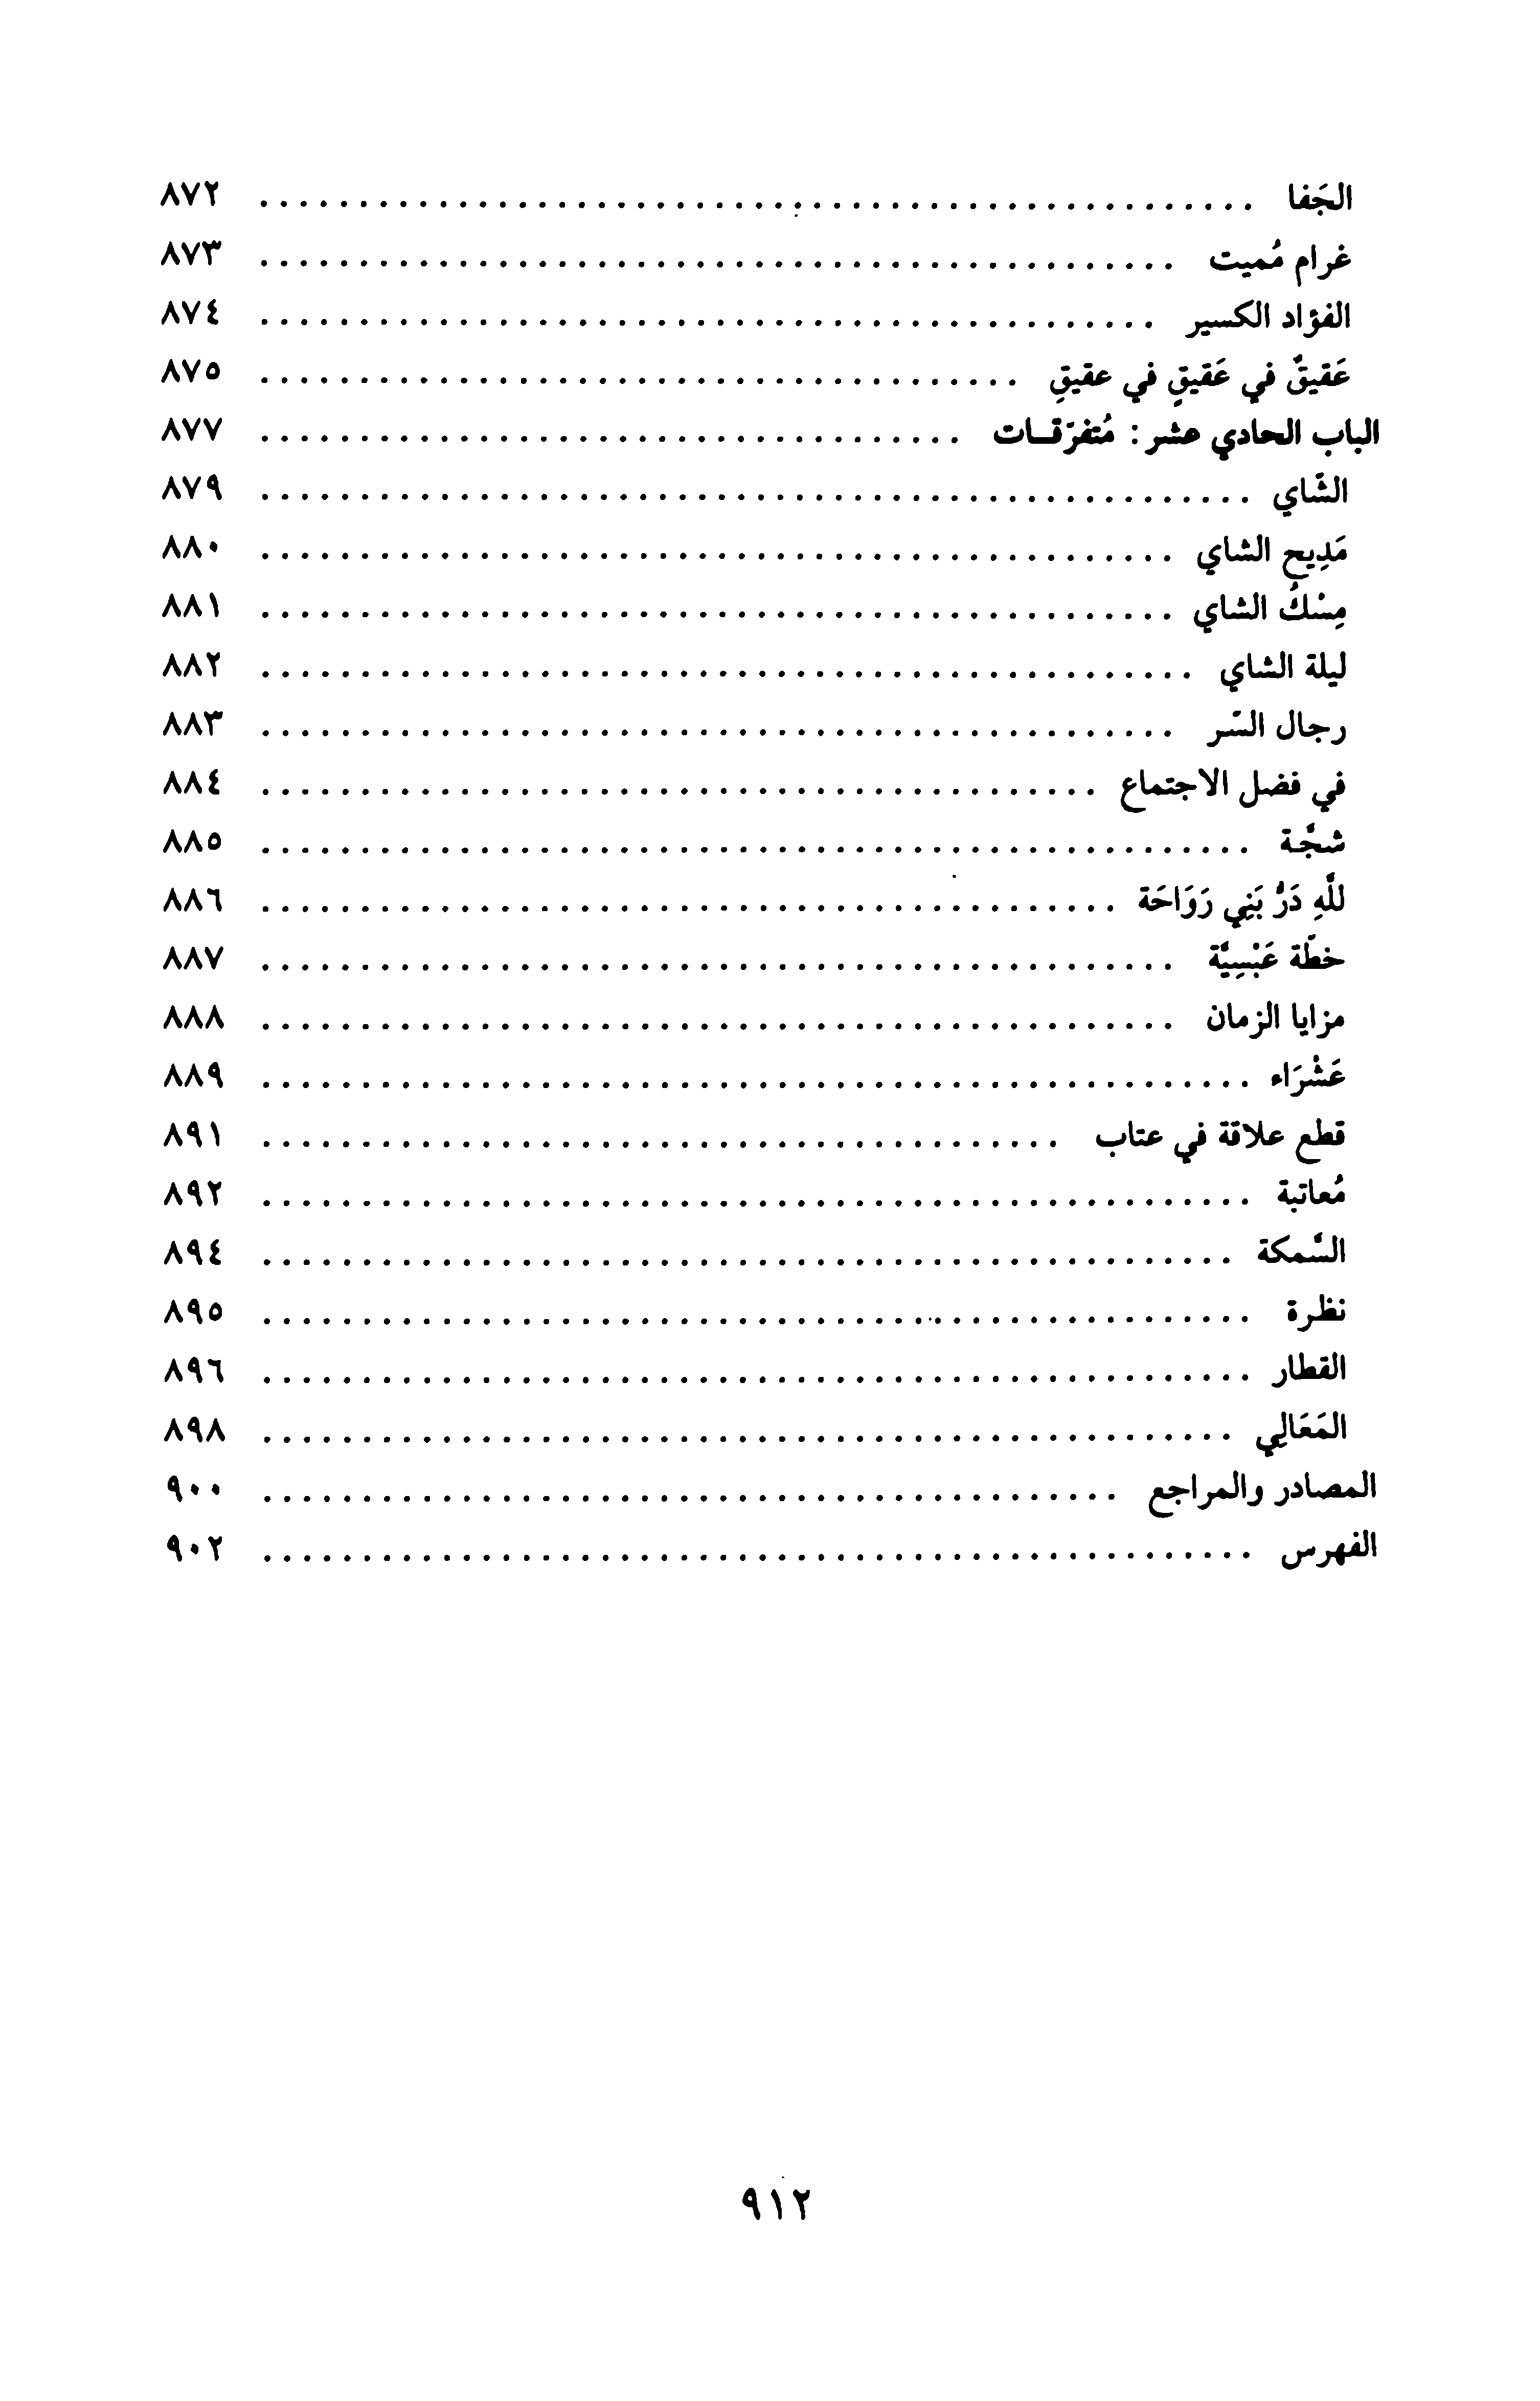 Arabic-TOC.png